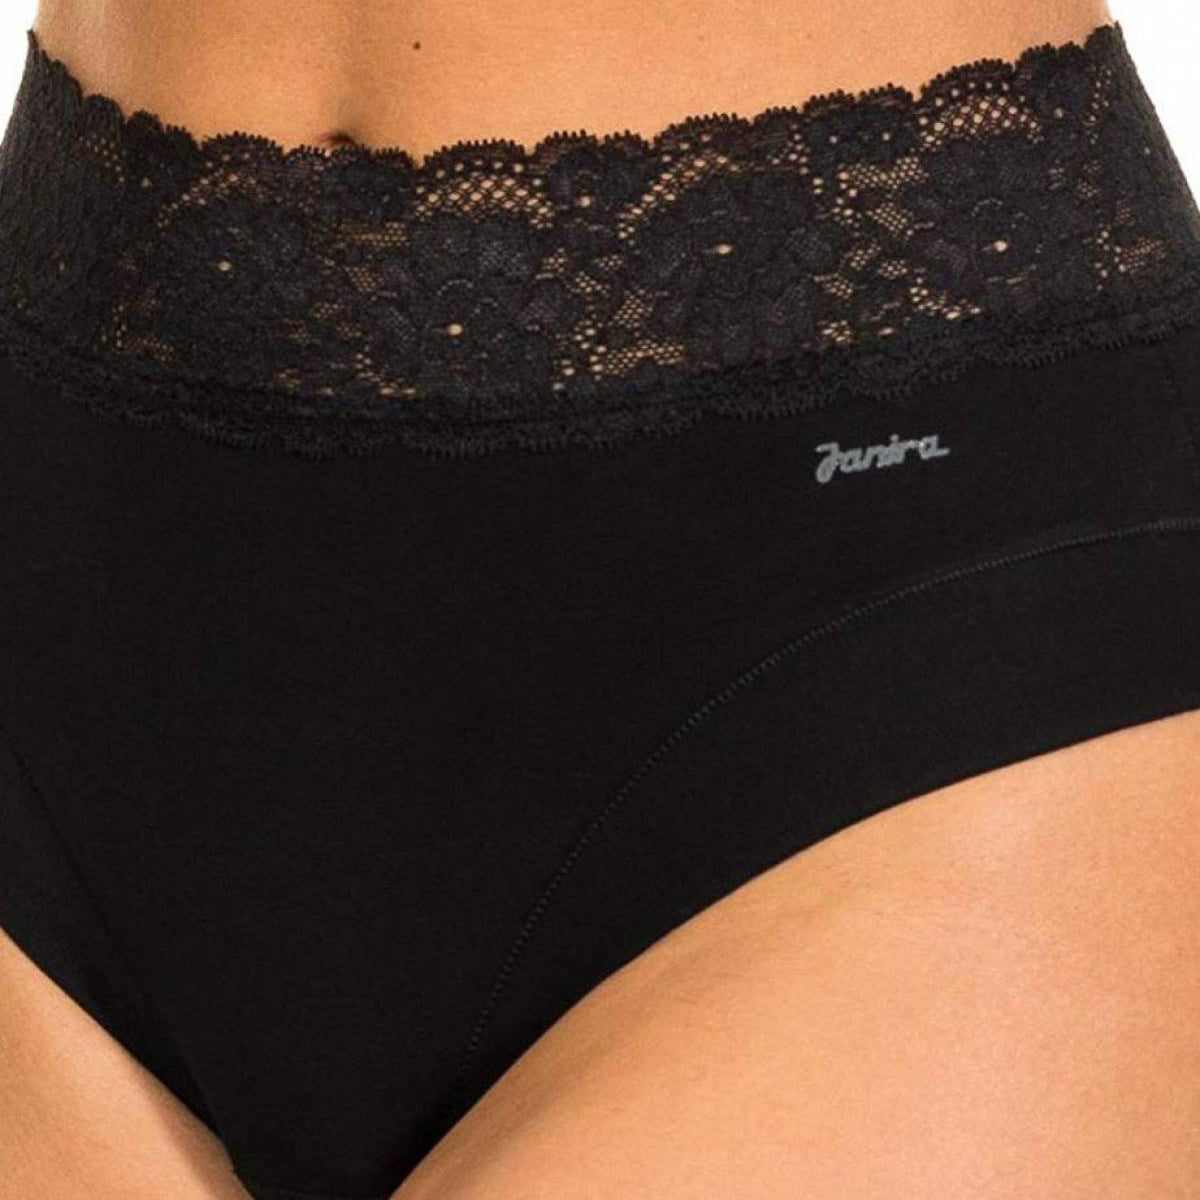 Janira dolce cinture brief black panty cotton underwear spain spanish lingerie canada linea intima